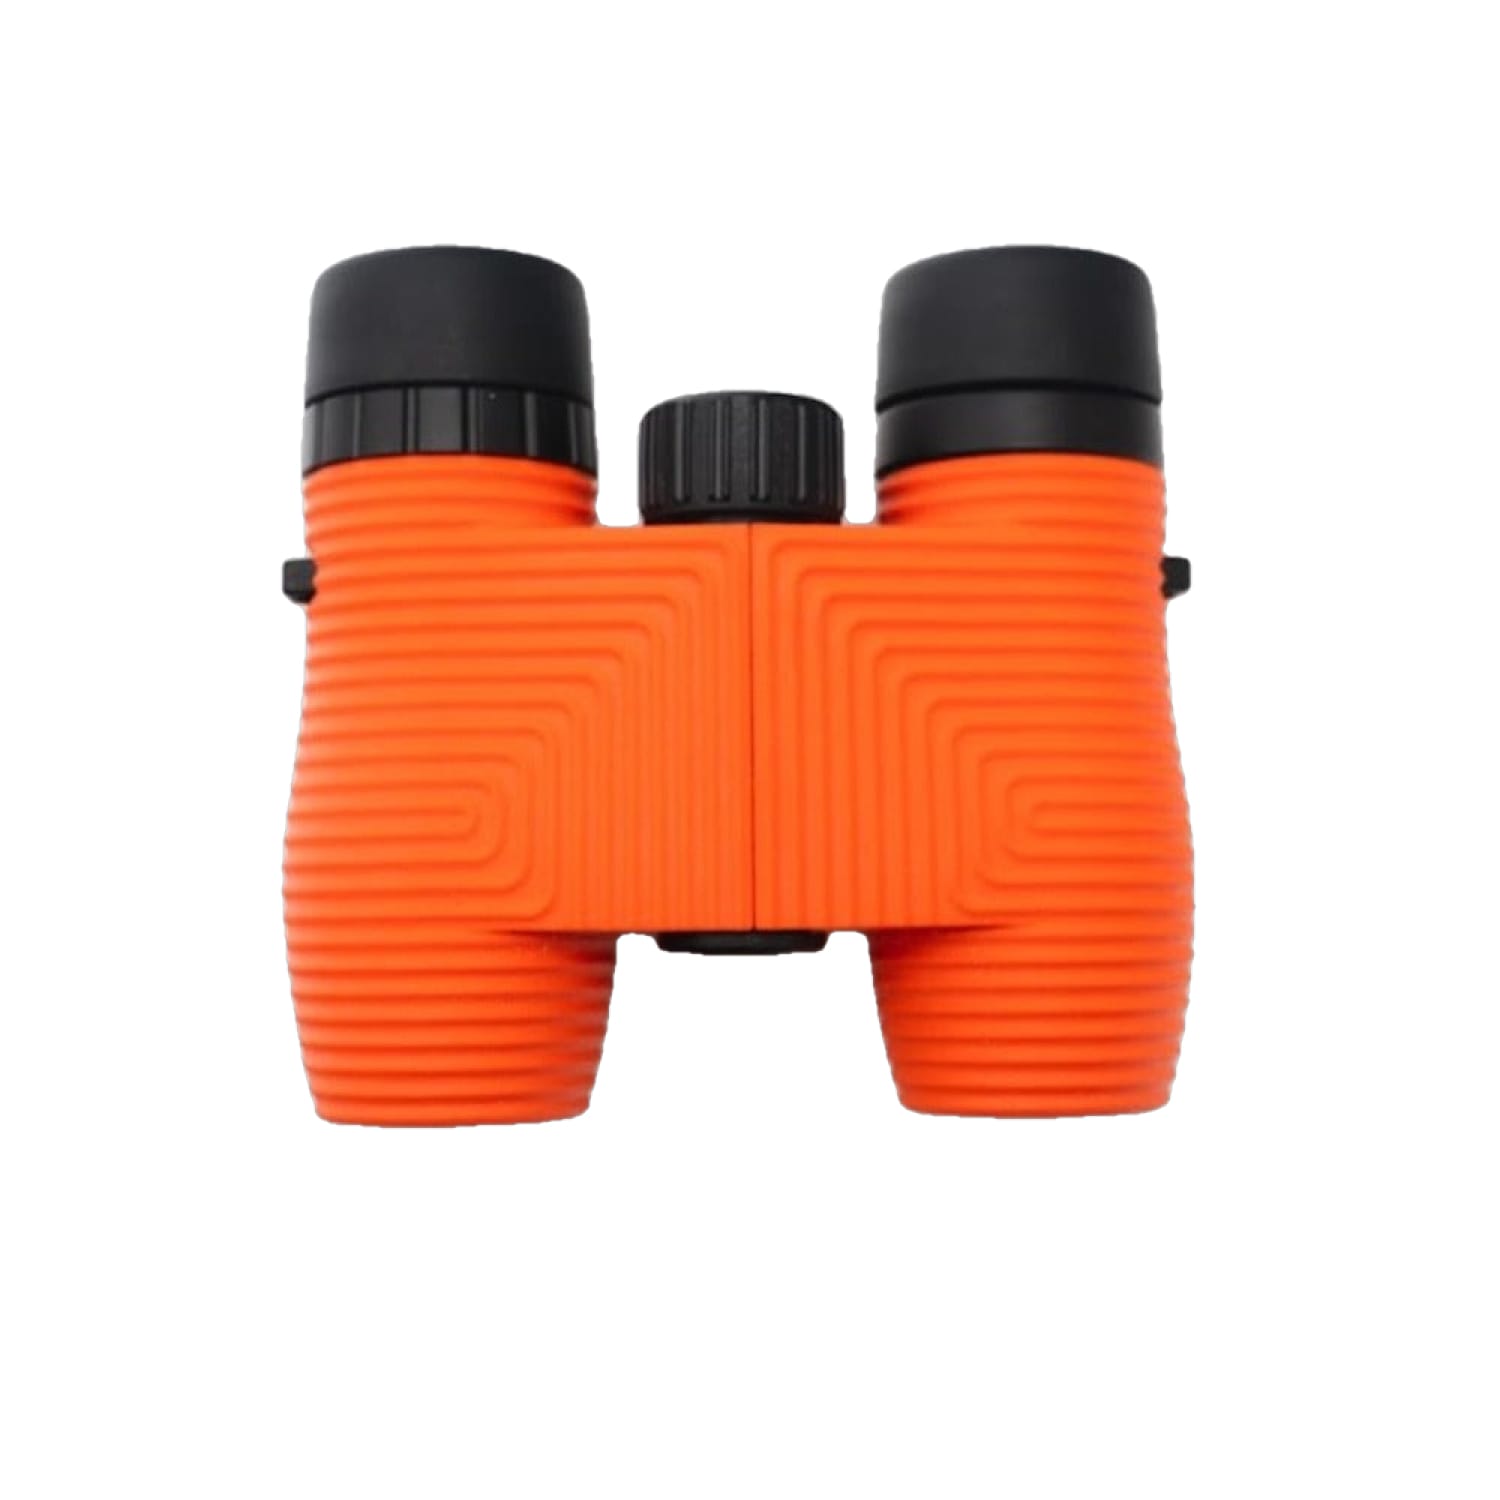 Standard Issue 8x25 Waterproof Binoculars